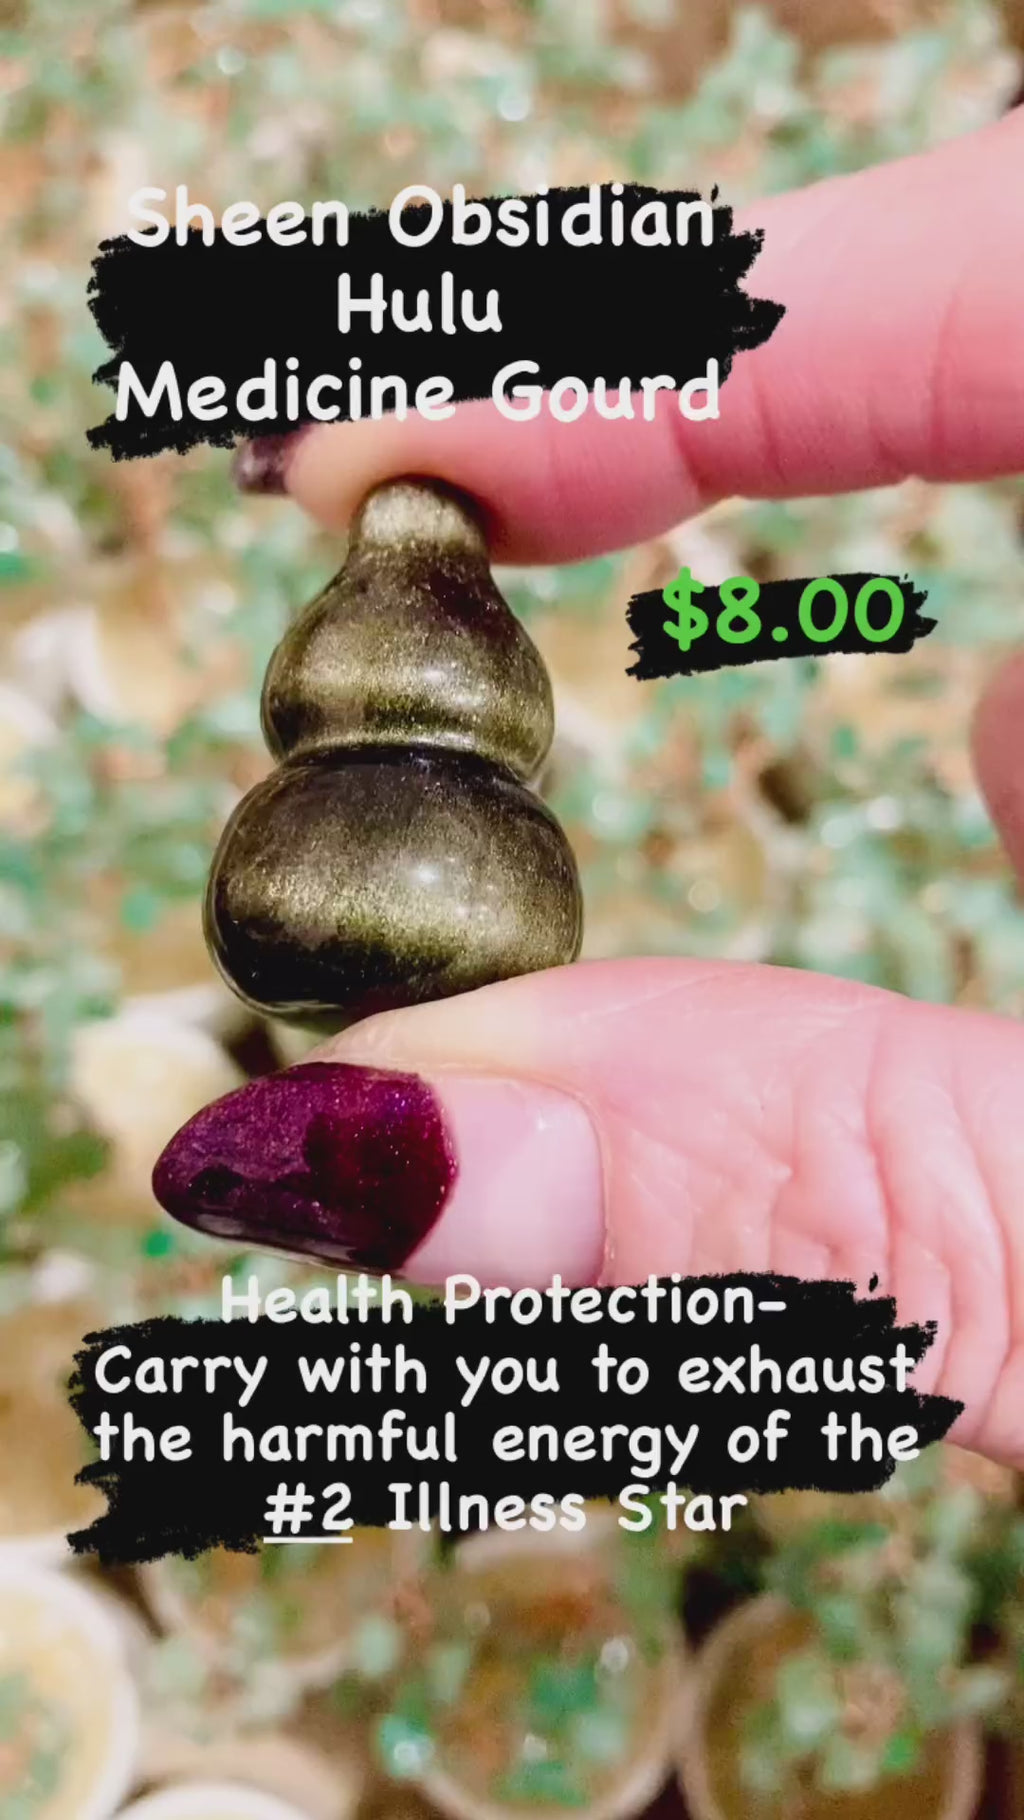 Hu-Lu Medicine Gourd, Sheen Obsidian 1.15" x 0.75"